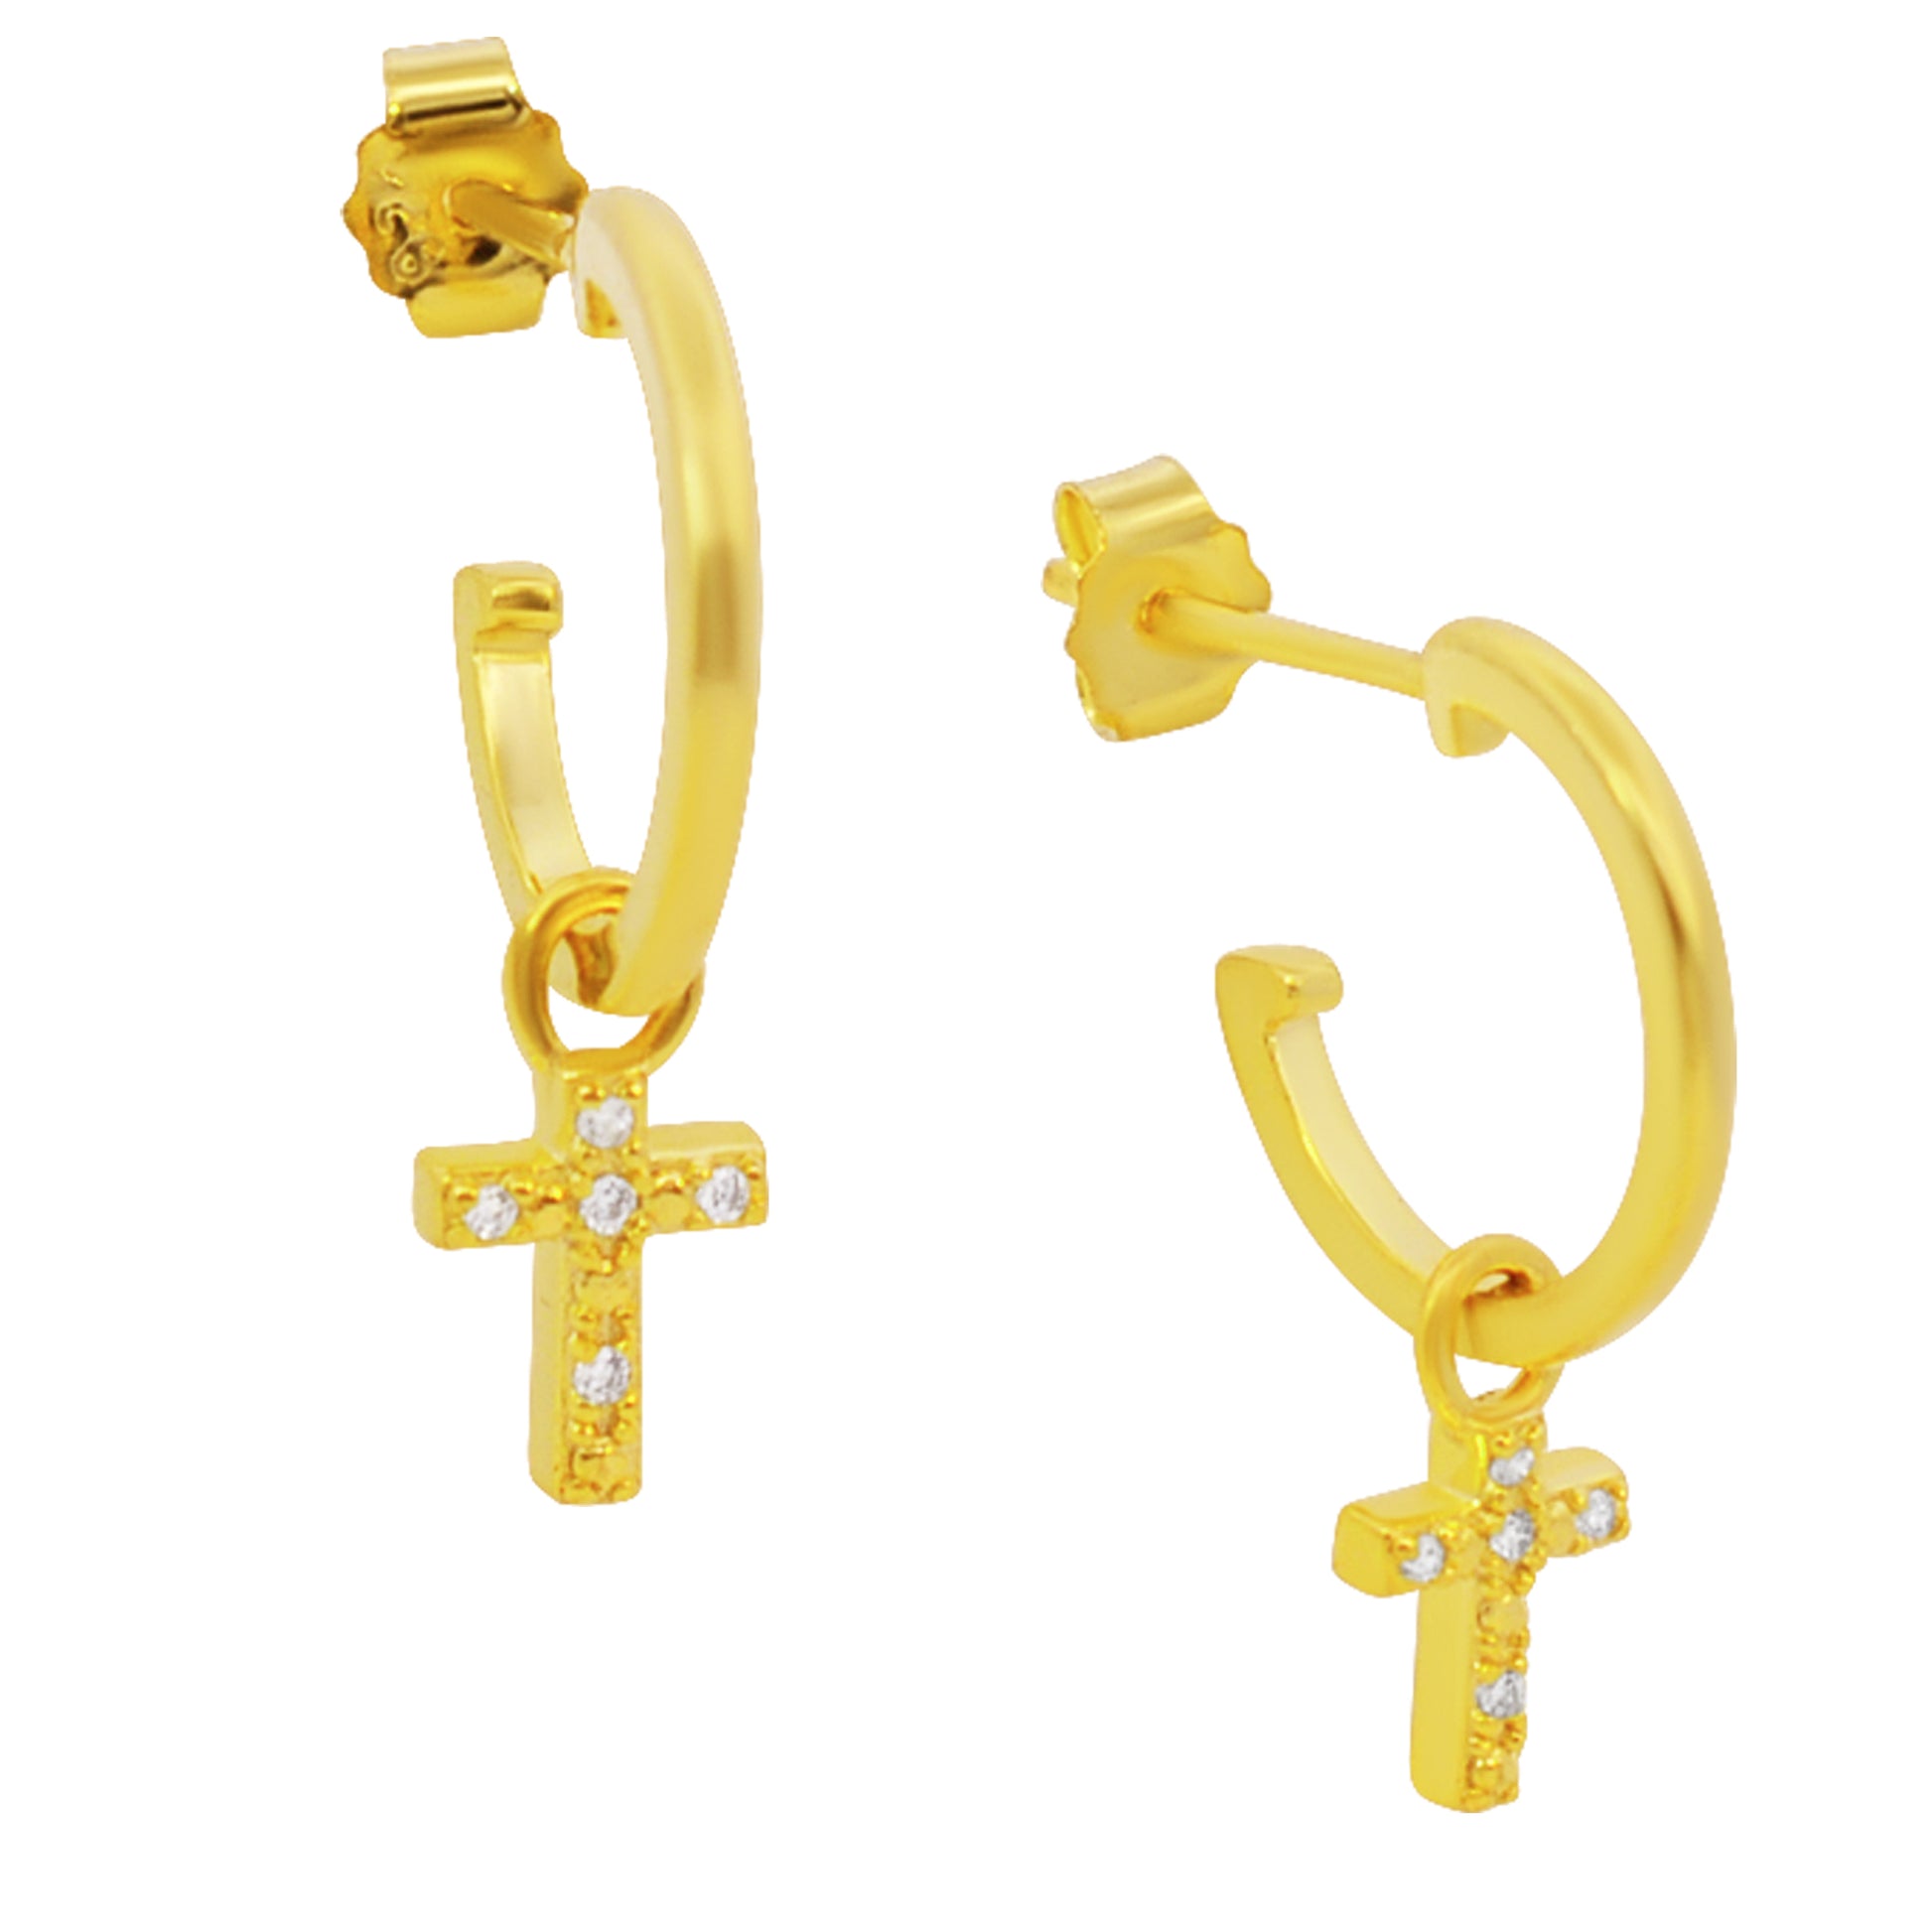 925 Silver Dangling Cross CZ Earrings, Half Hoop Design, Push Backing, Religious Jewelry